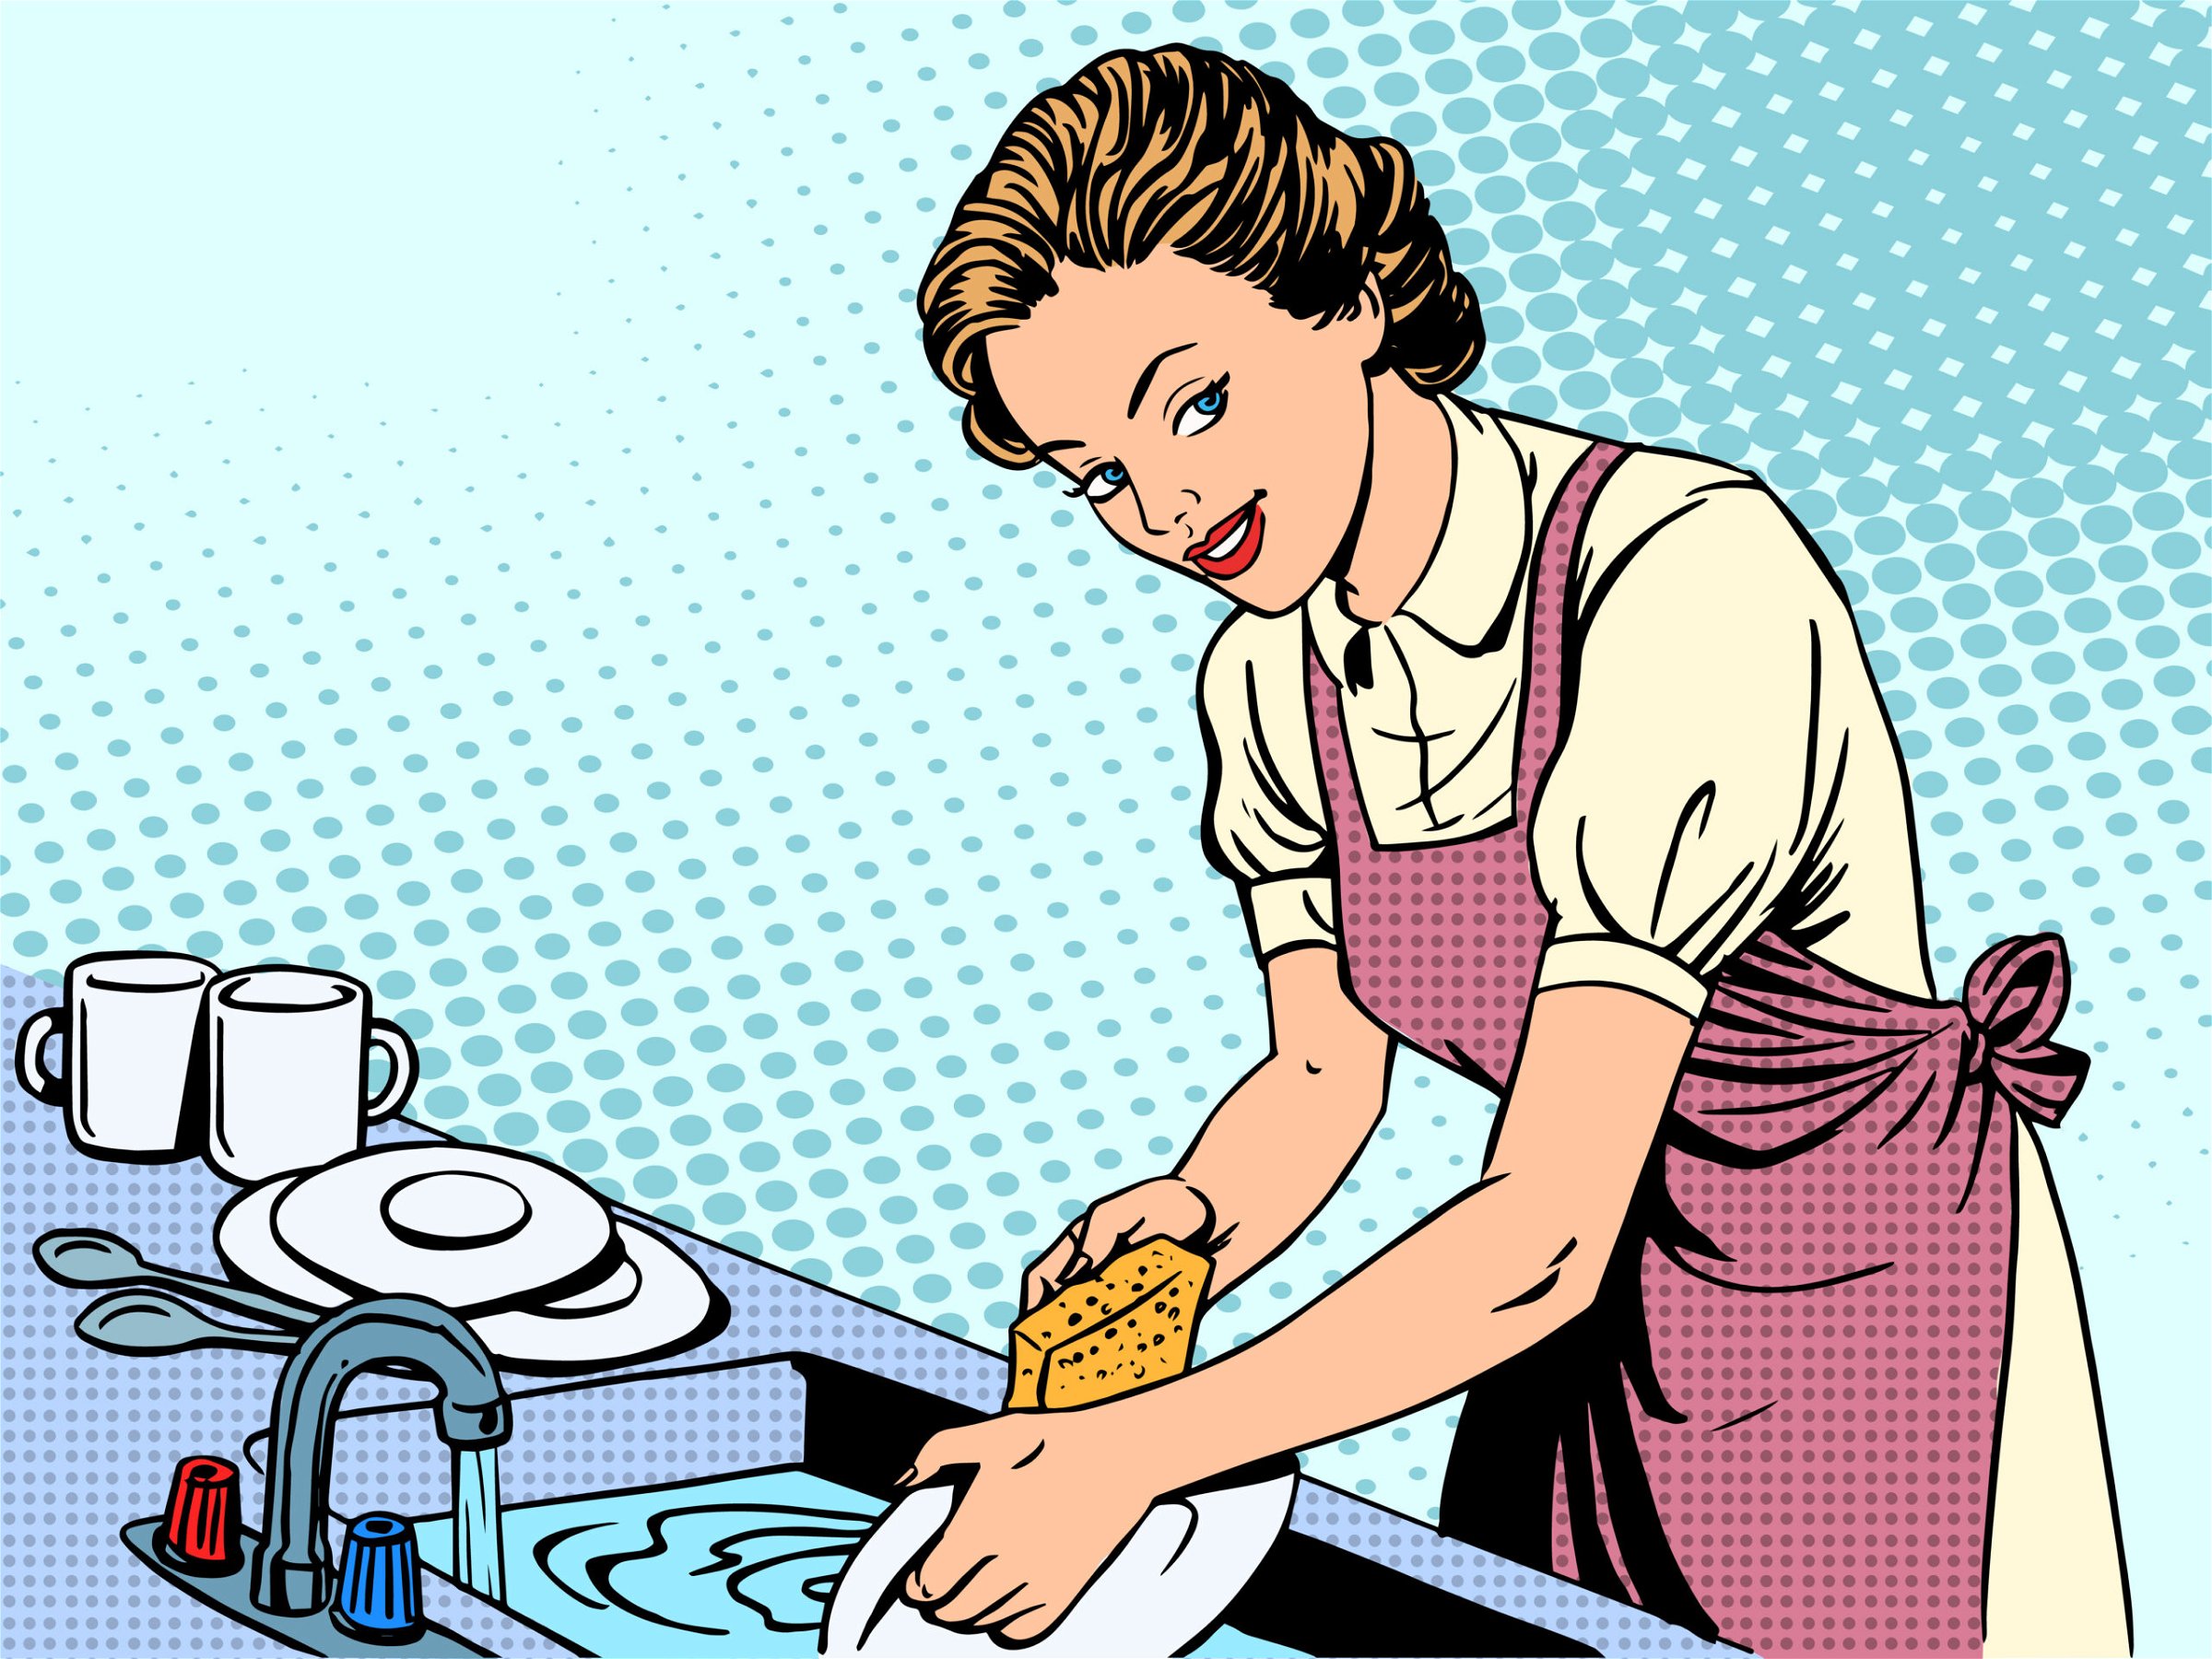 Trump Tells Women to Buy Dishwashers